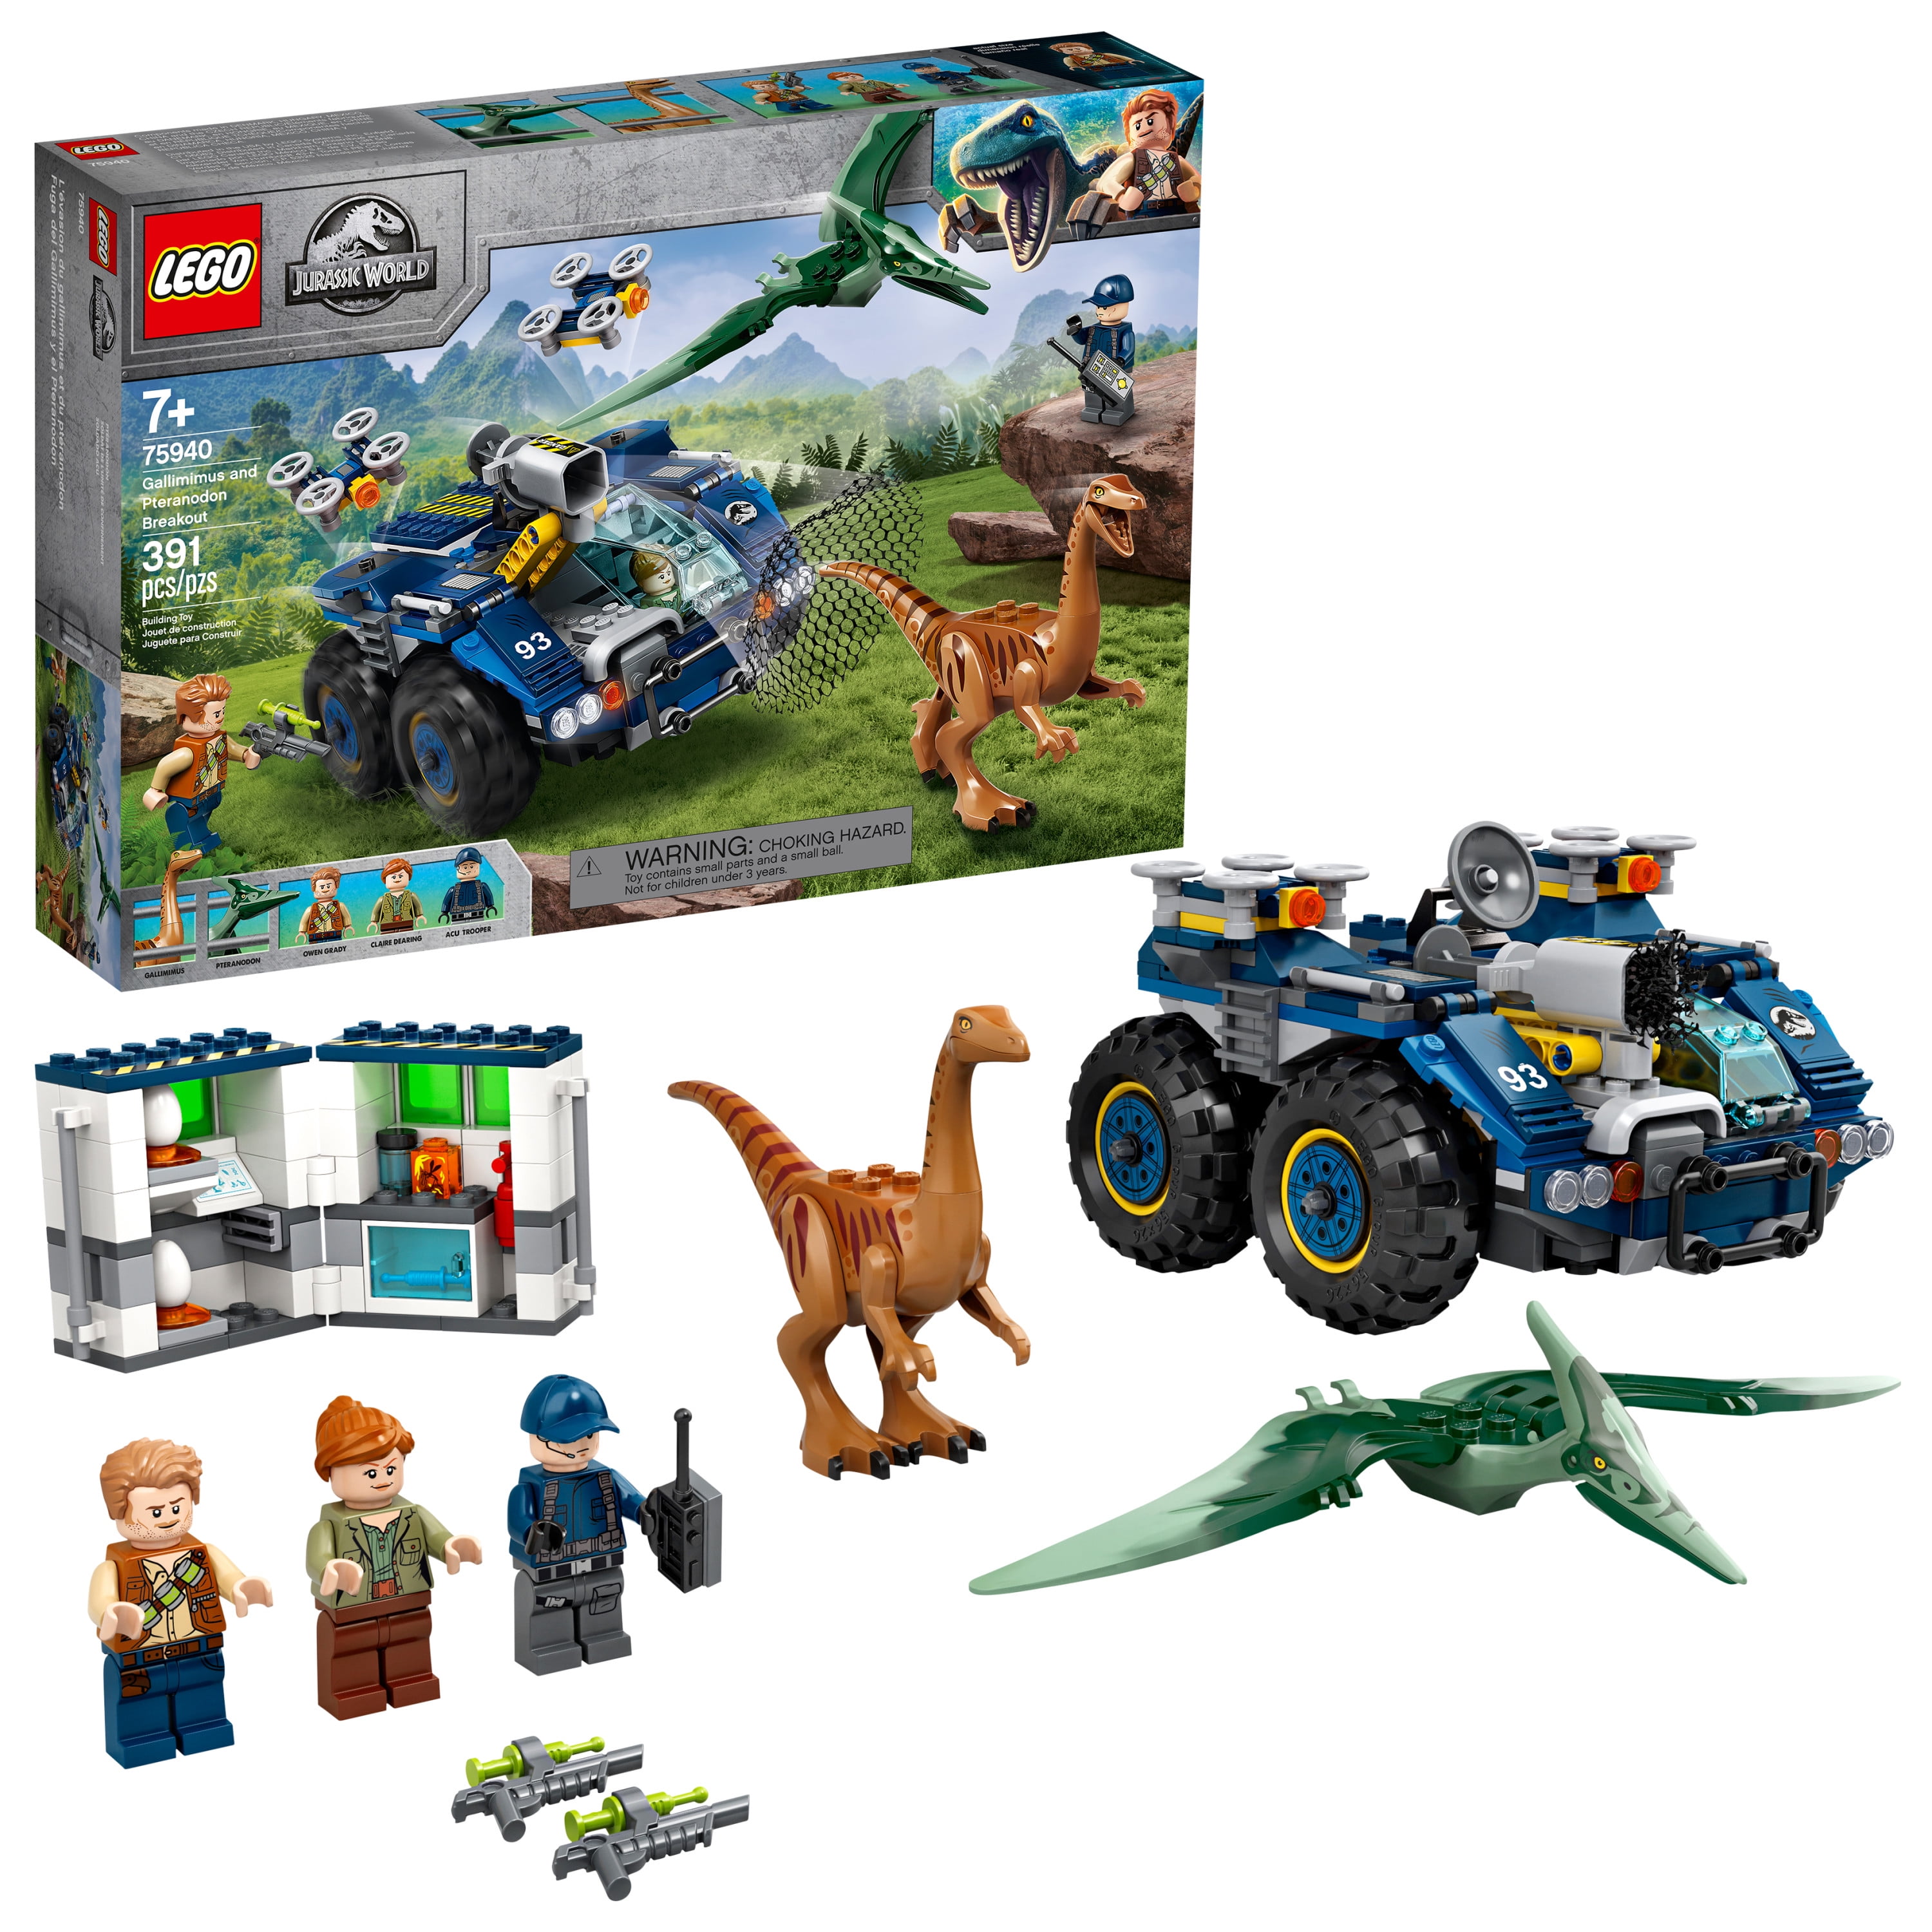 LEGO Jurassic World Gallimimus and 75940 Building Set (391 Pieces) Walmart.com